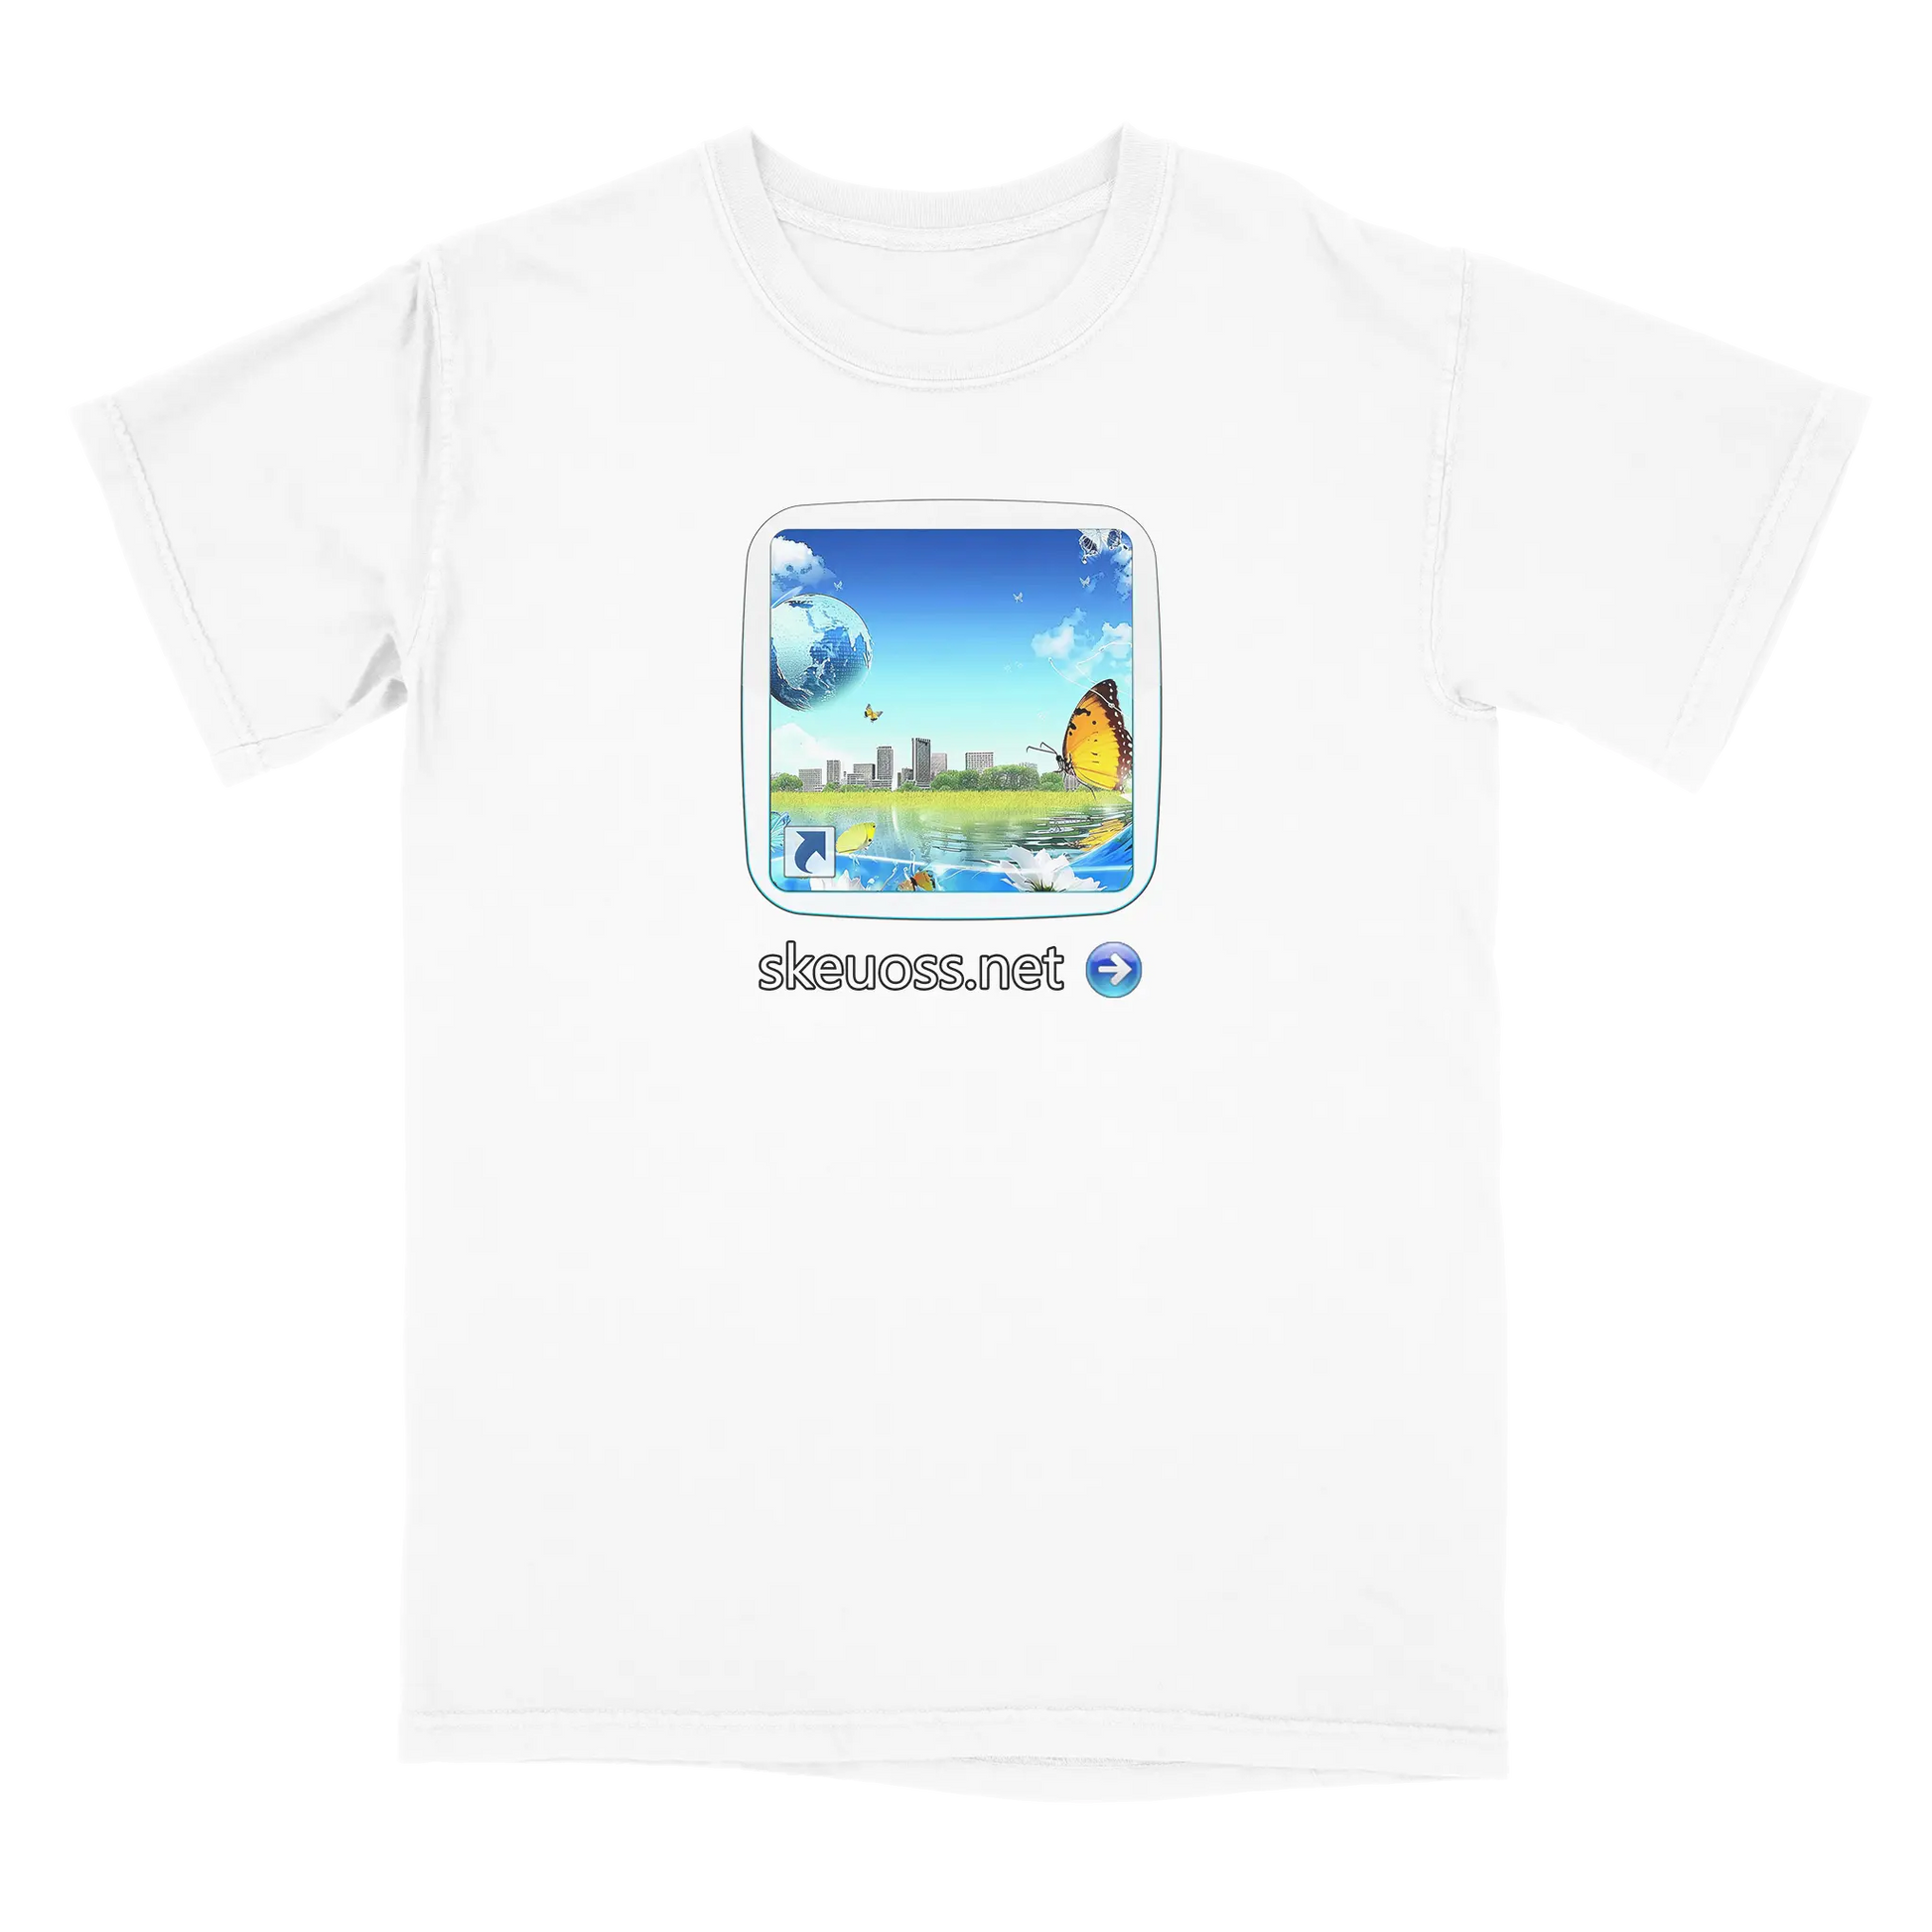 Frutiger Aero T-shirt - User Login Collection - User 415